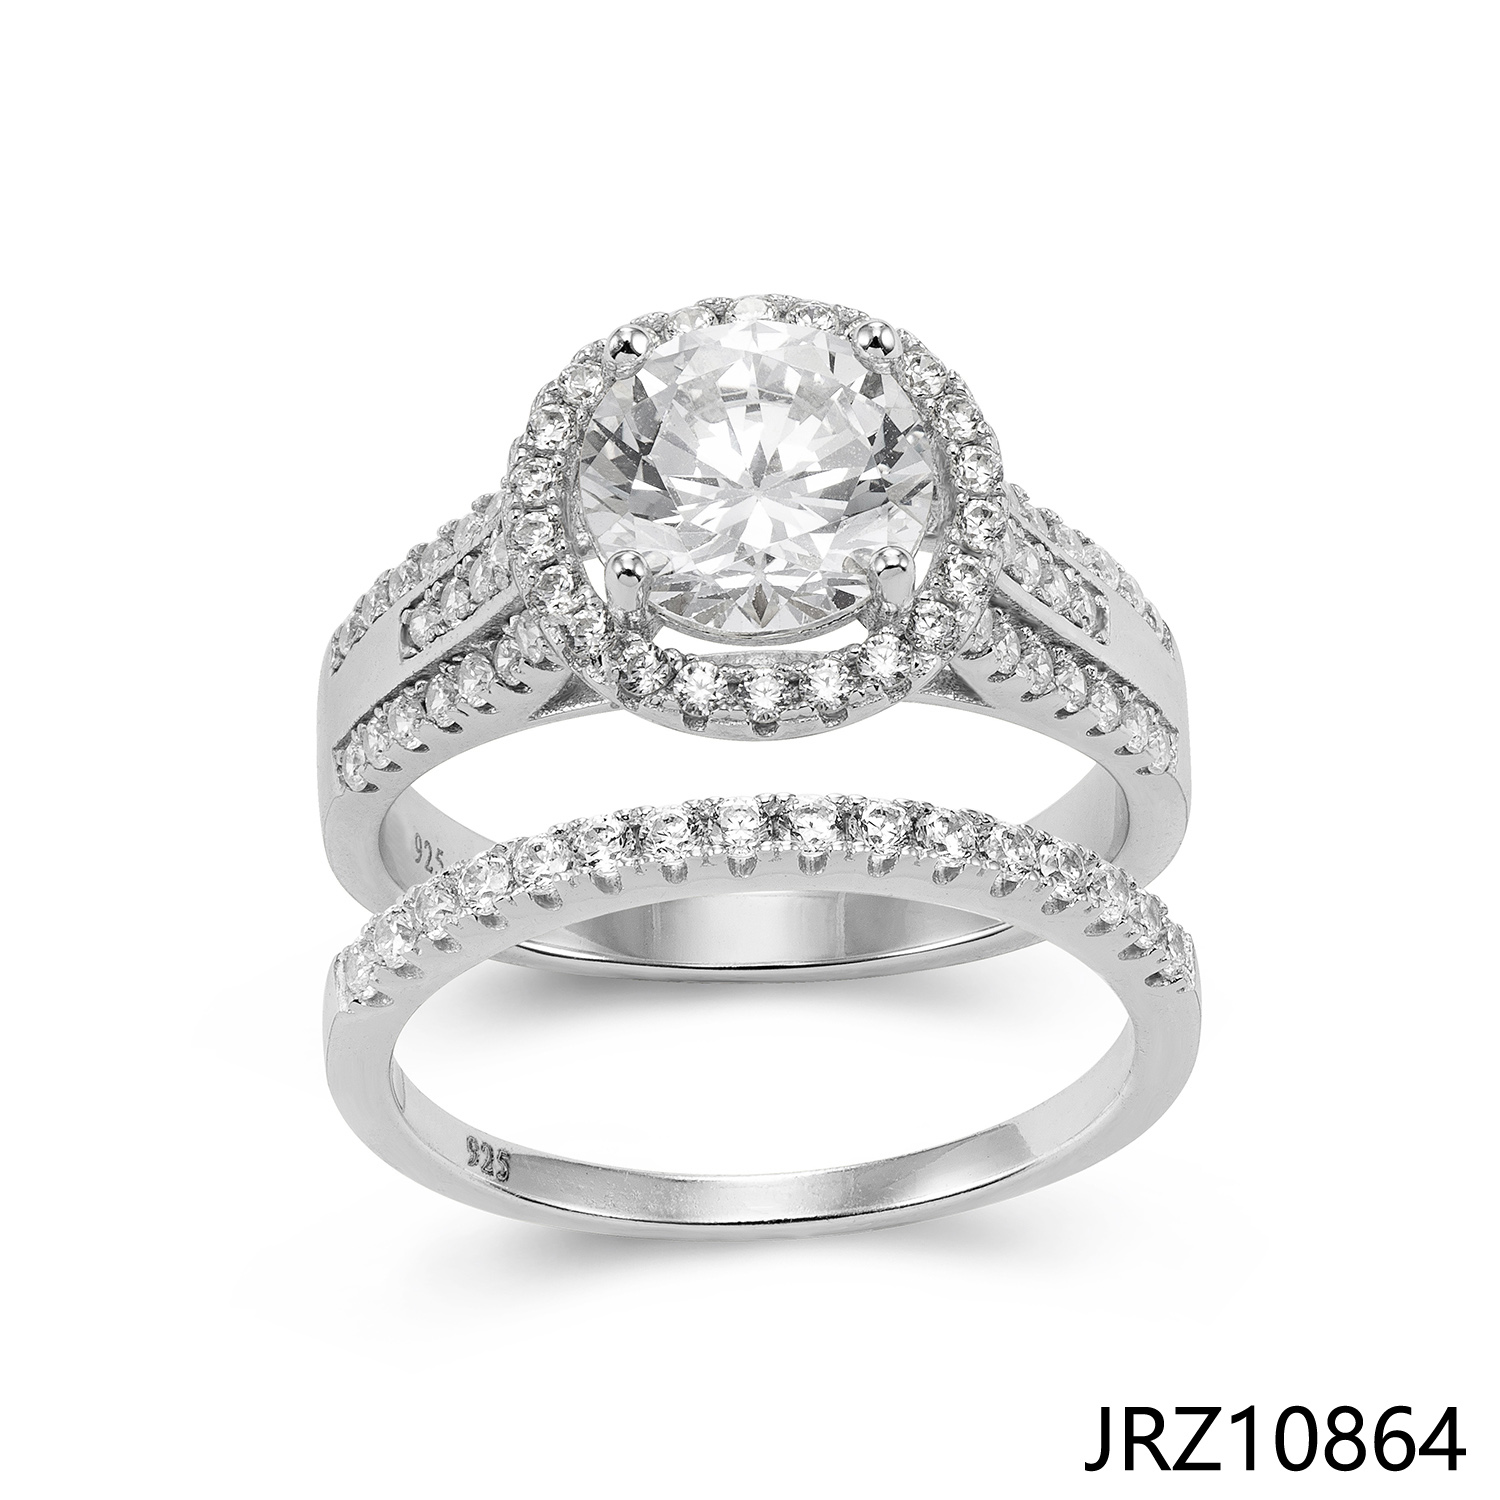 JASEN JEWELRY 925 sterling silver rhodium plating Engagement Ring Custom Women Wedding Rings